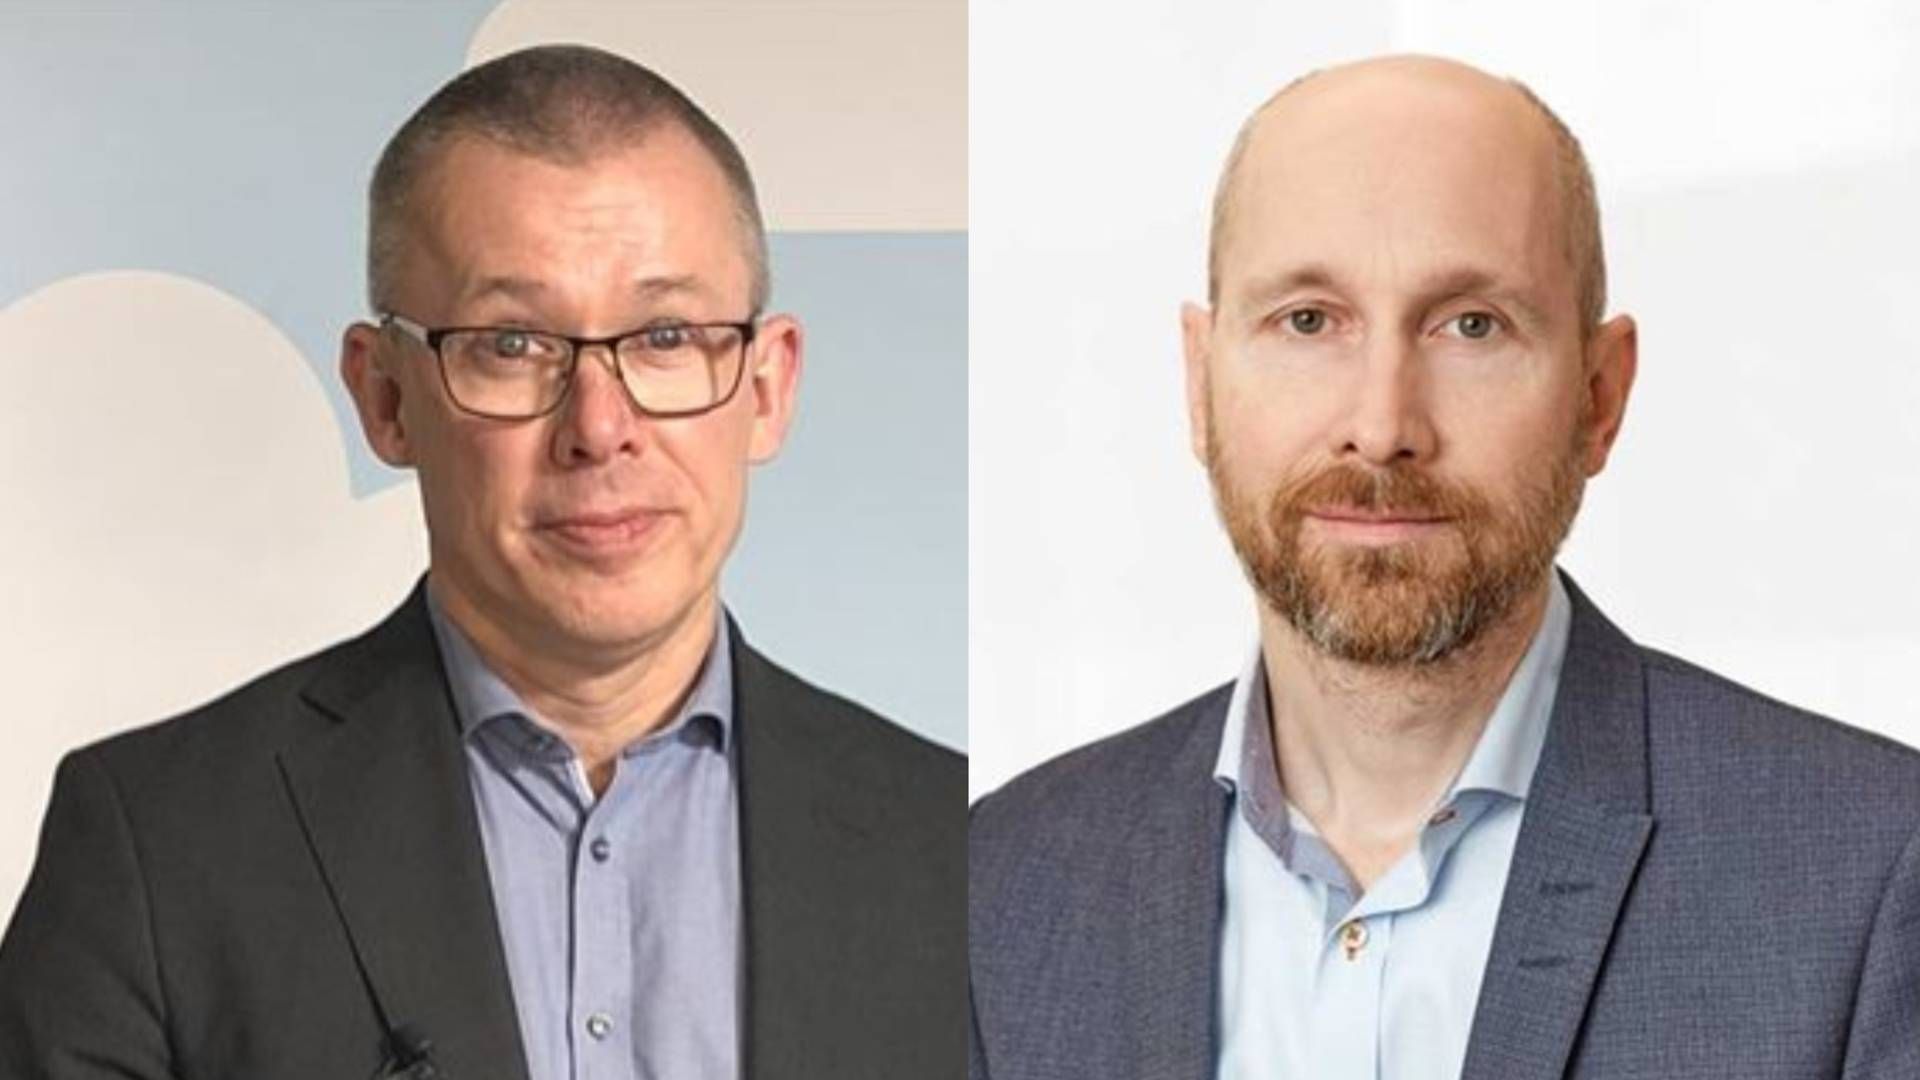 Marcus Blomberg (right) is replacing Michael Tjeller (left) as head of asset management af Folksam. | Photo: Juha Hartomaa / Folksam PR